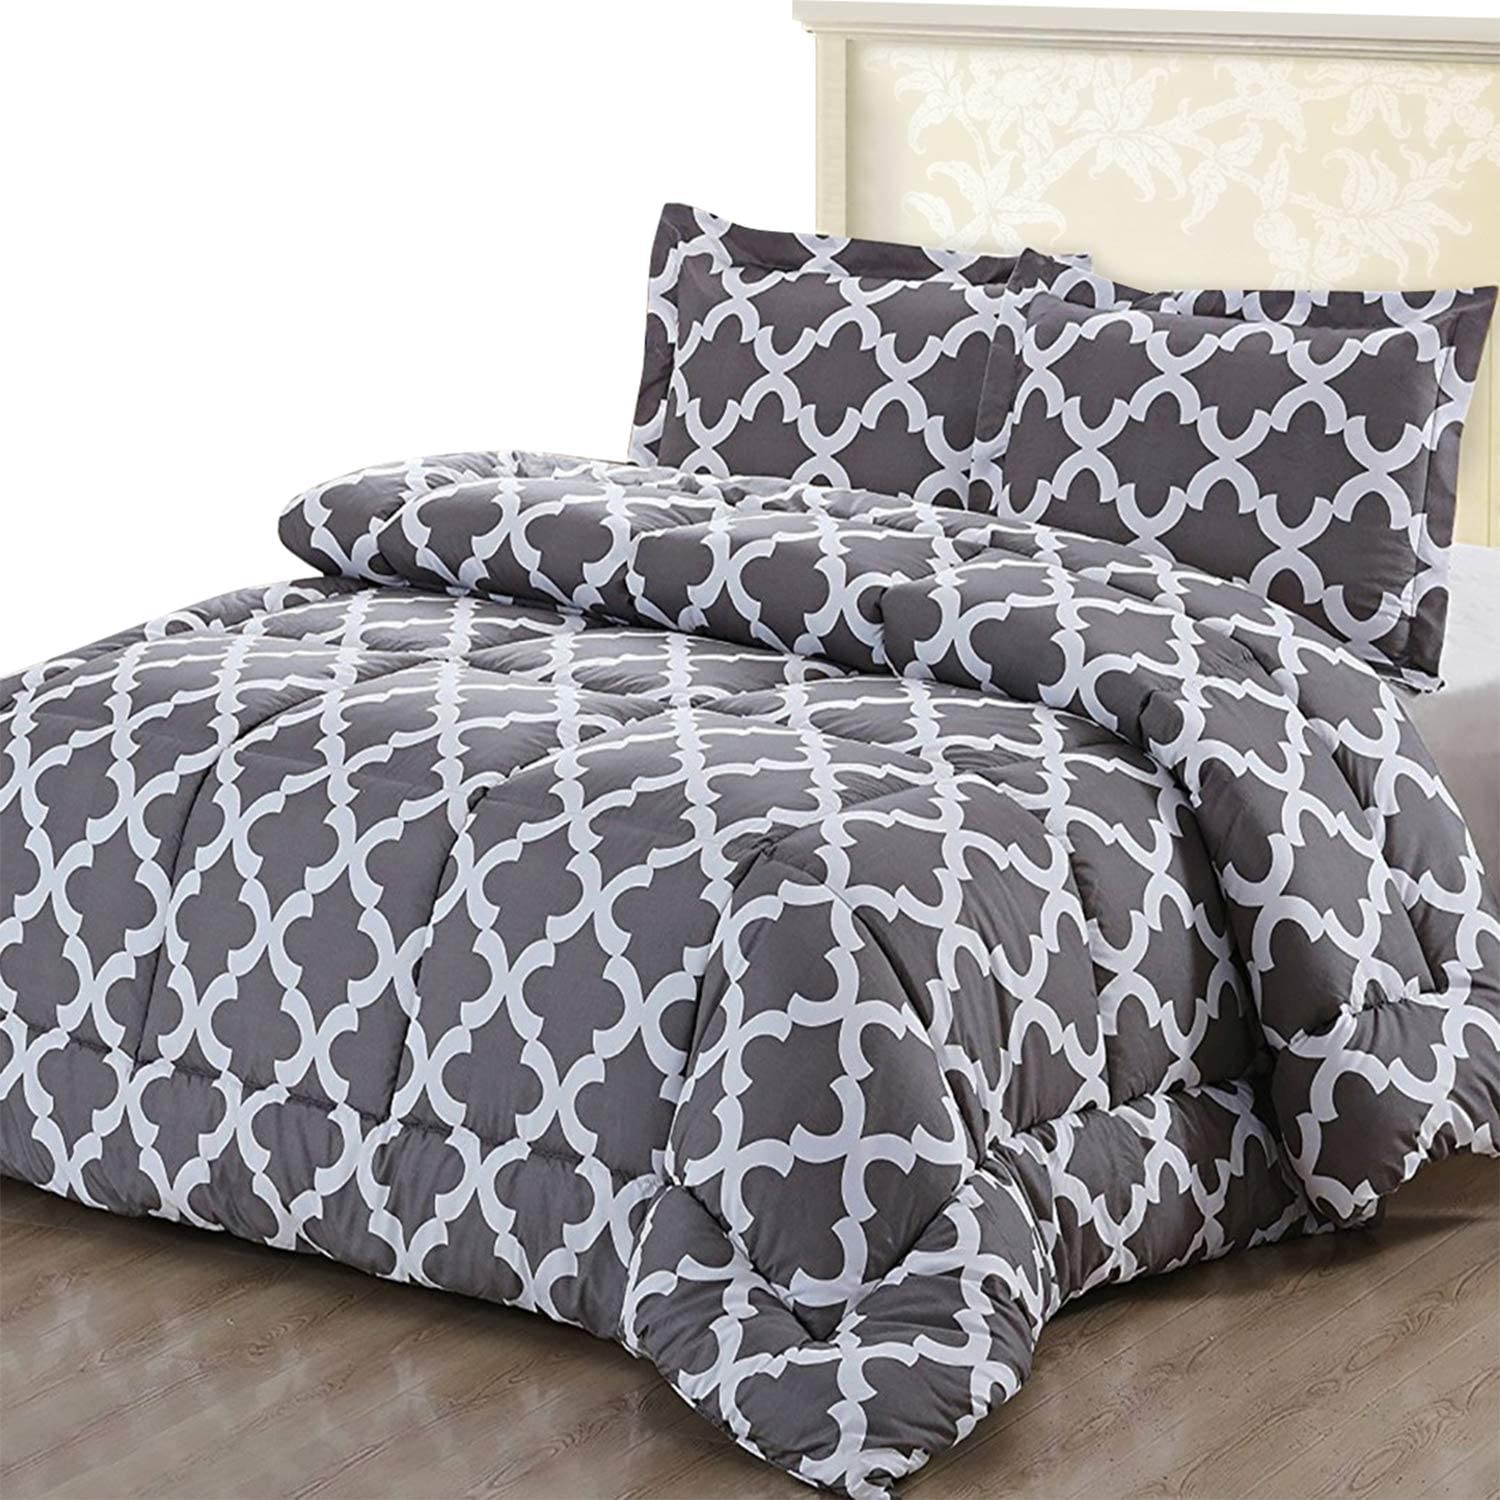 Utopia Bedding Brushed Microfiber King Comforter Set